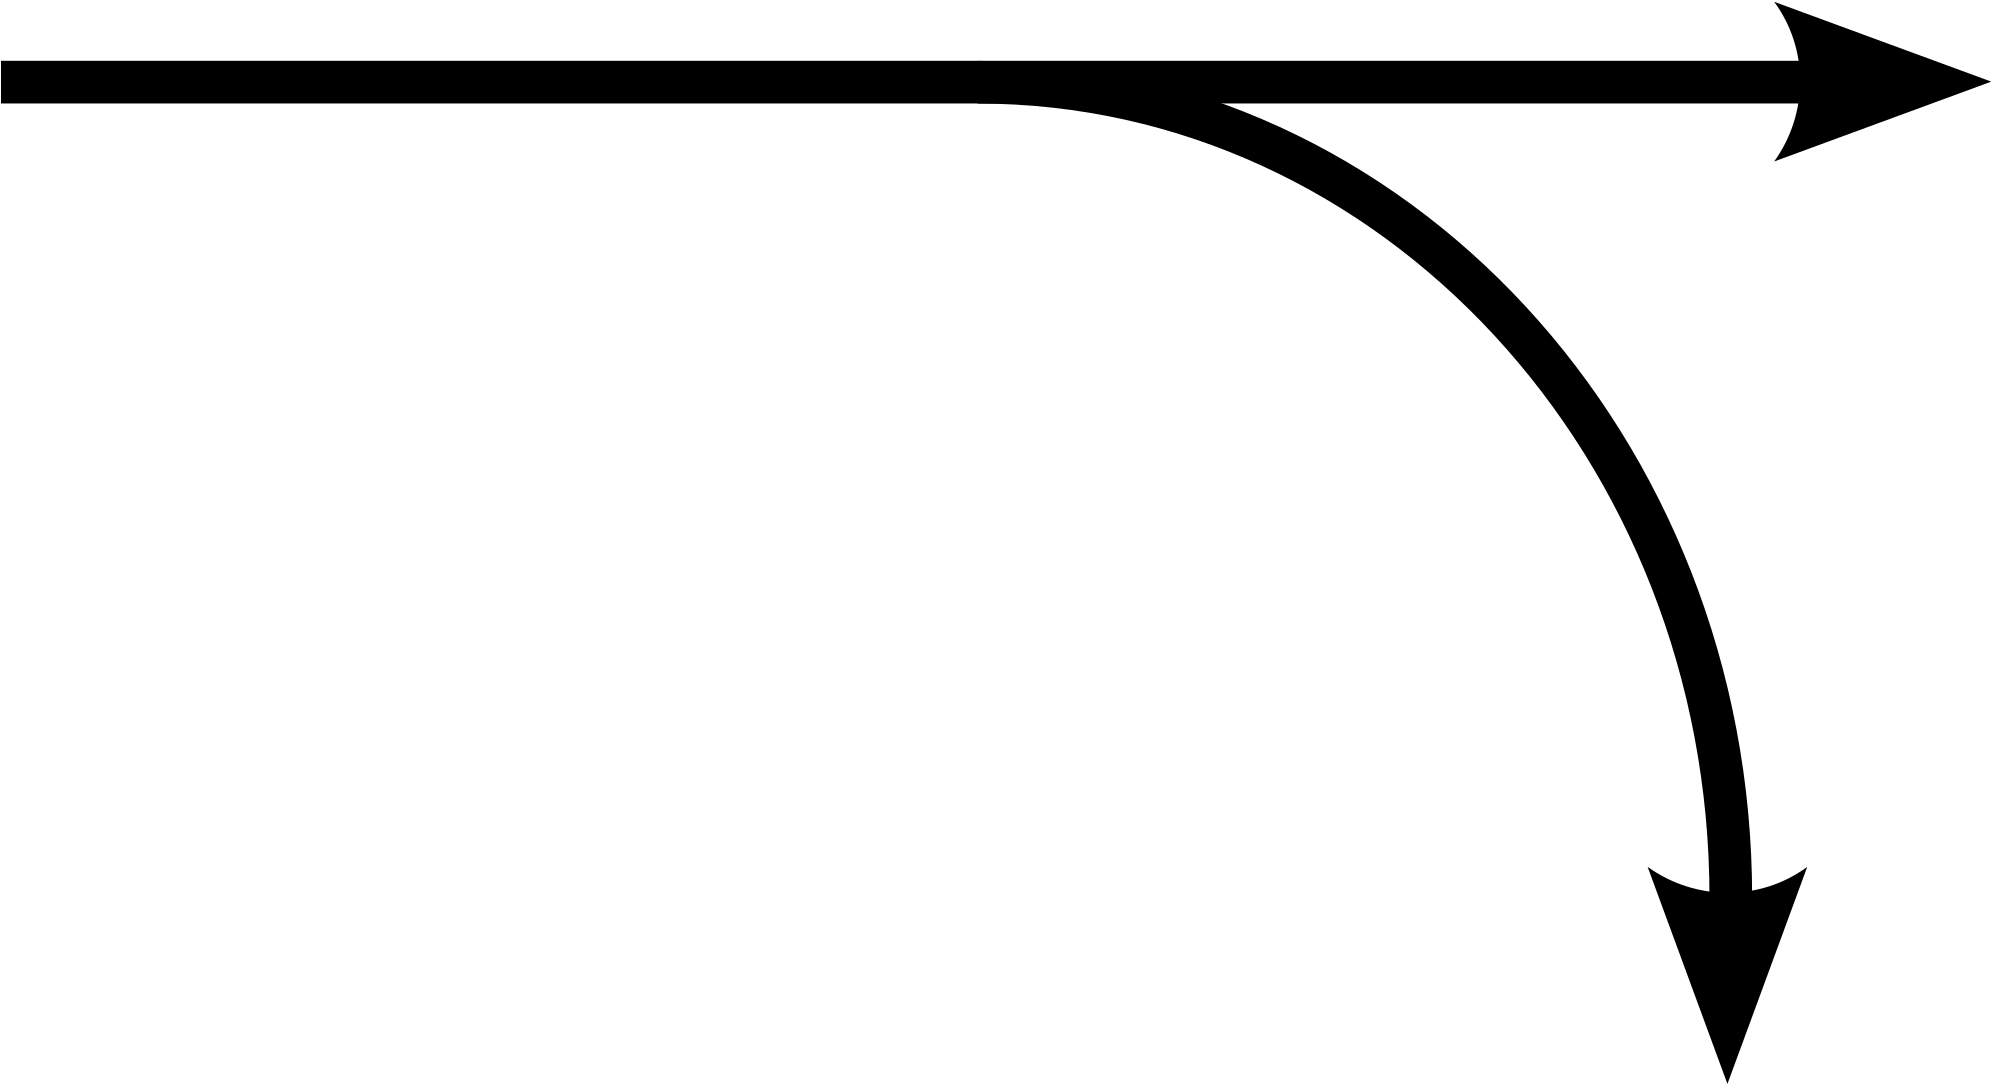 Open - Arrow Chemical Reaction (2000x2000)